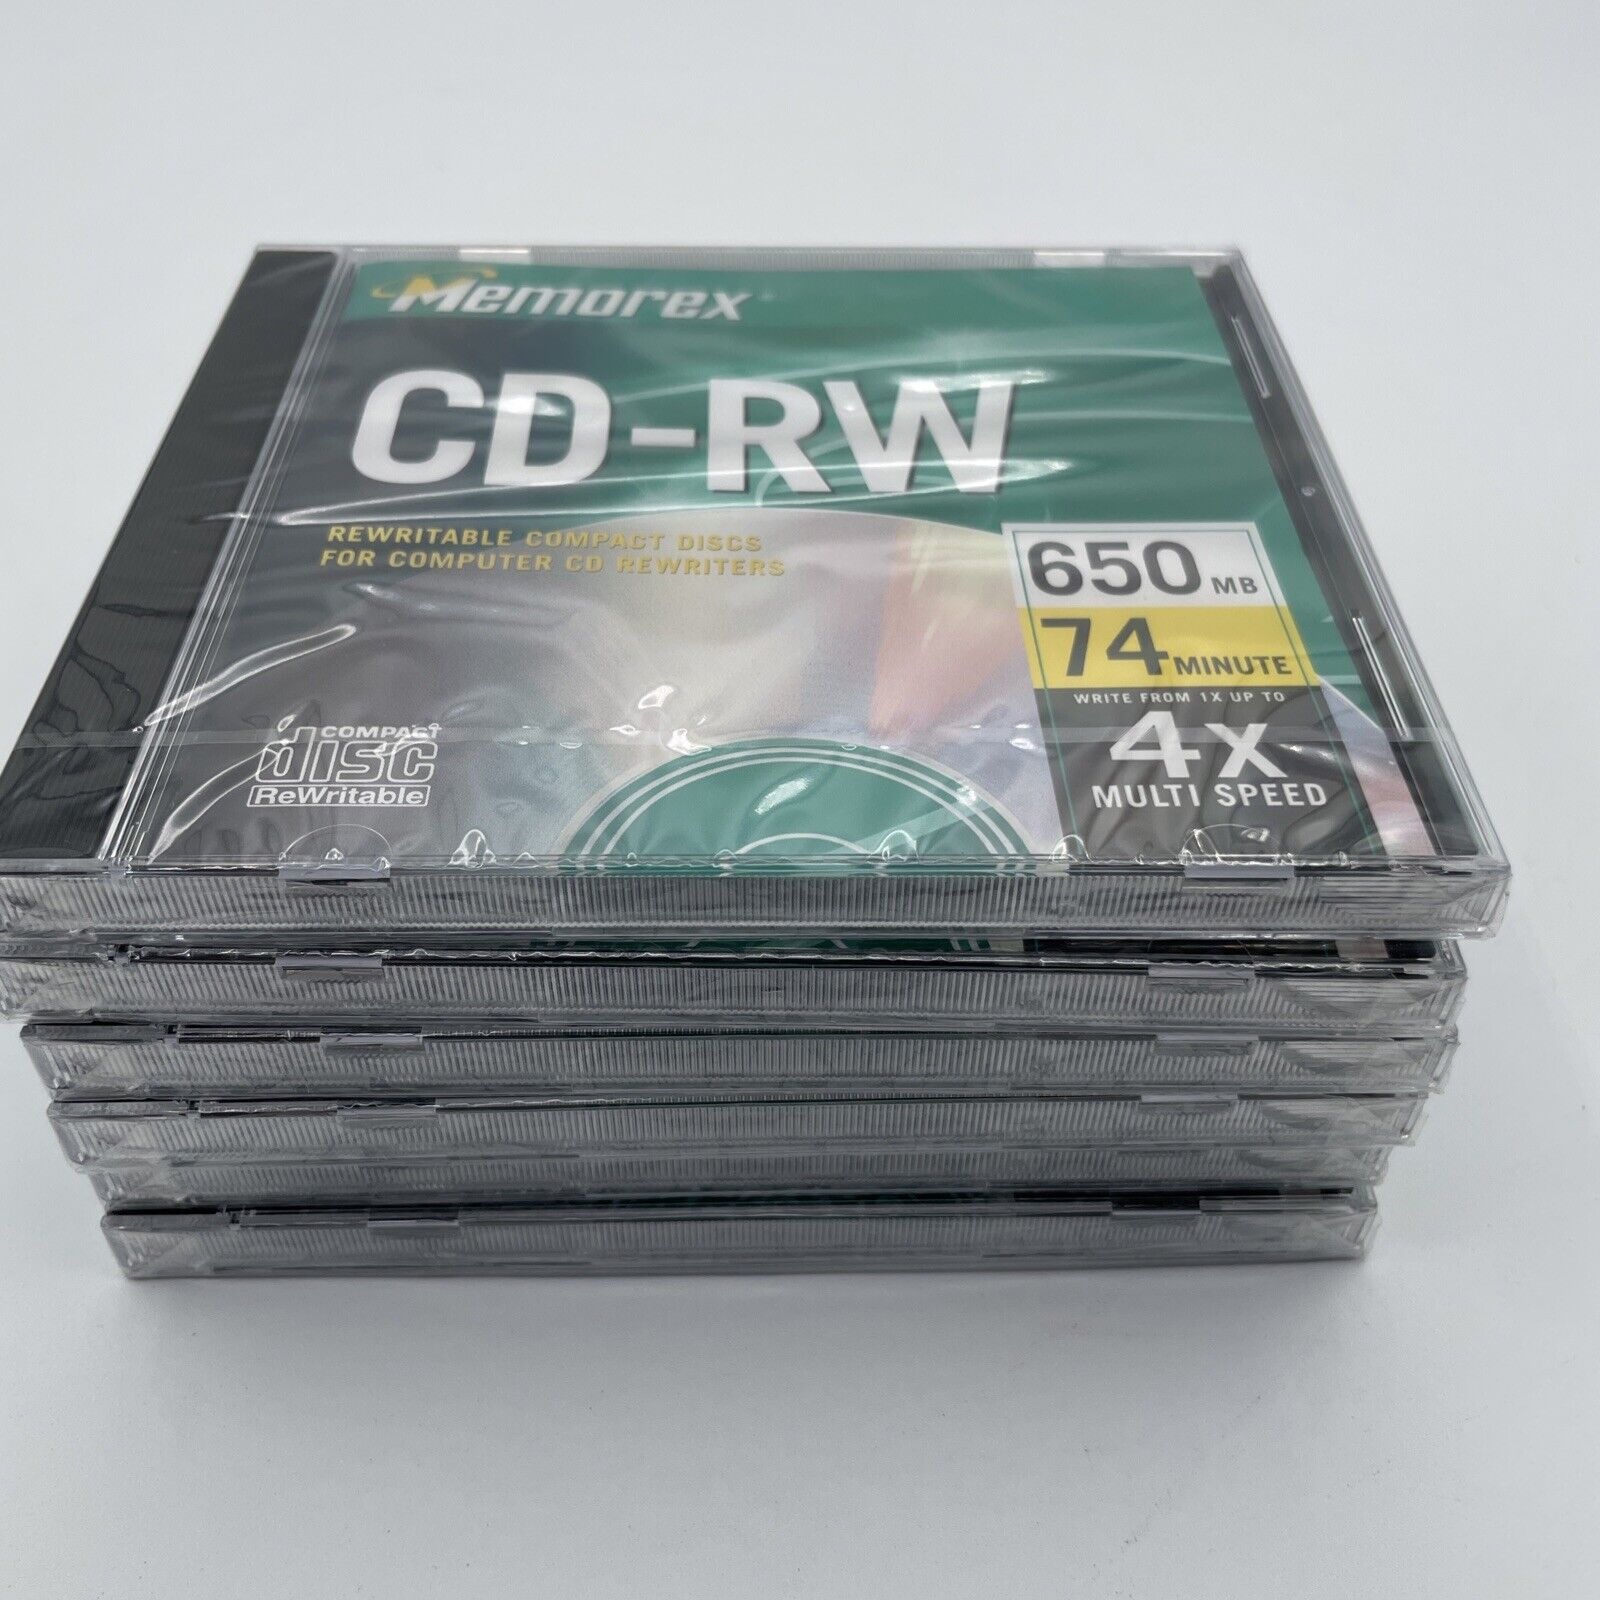 Memorex 6 Pack CD-RW Platinum 650 MB 74 Min 2X 4X Write Speed + (6) Sony disc